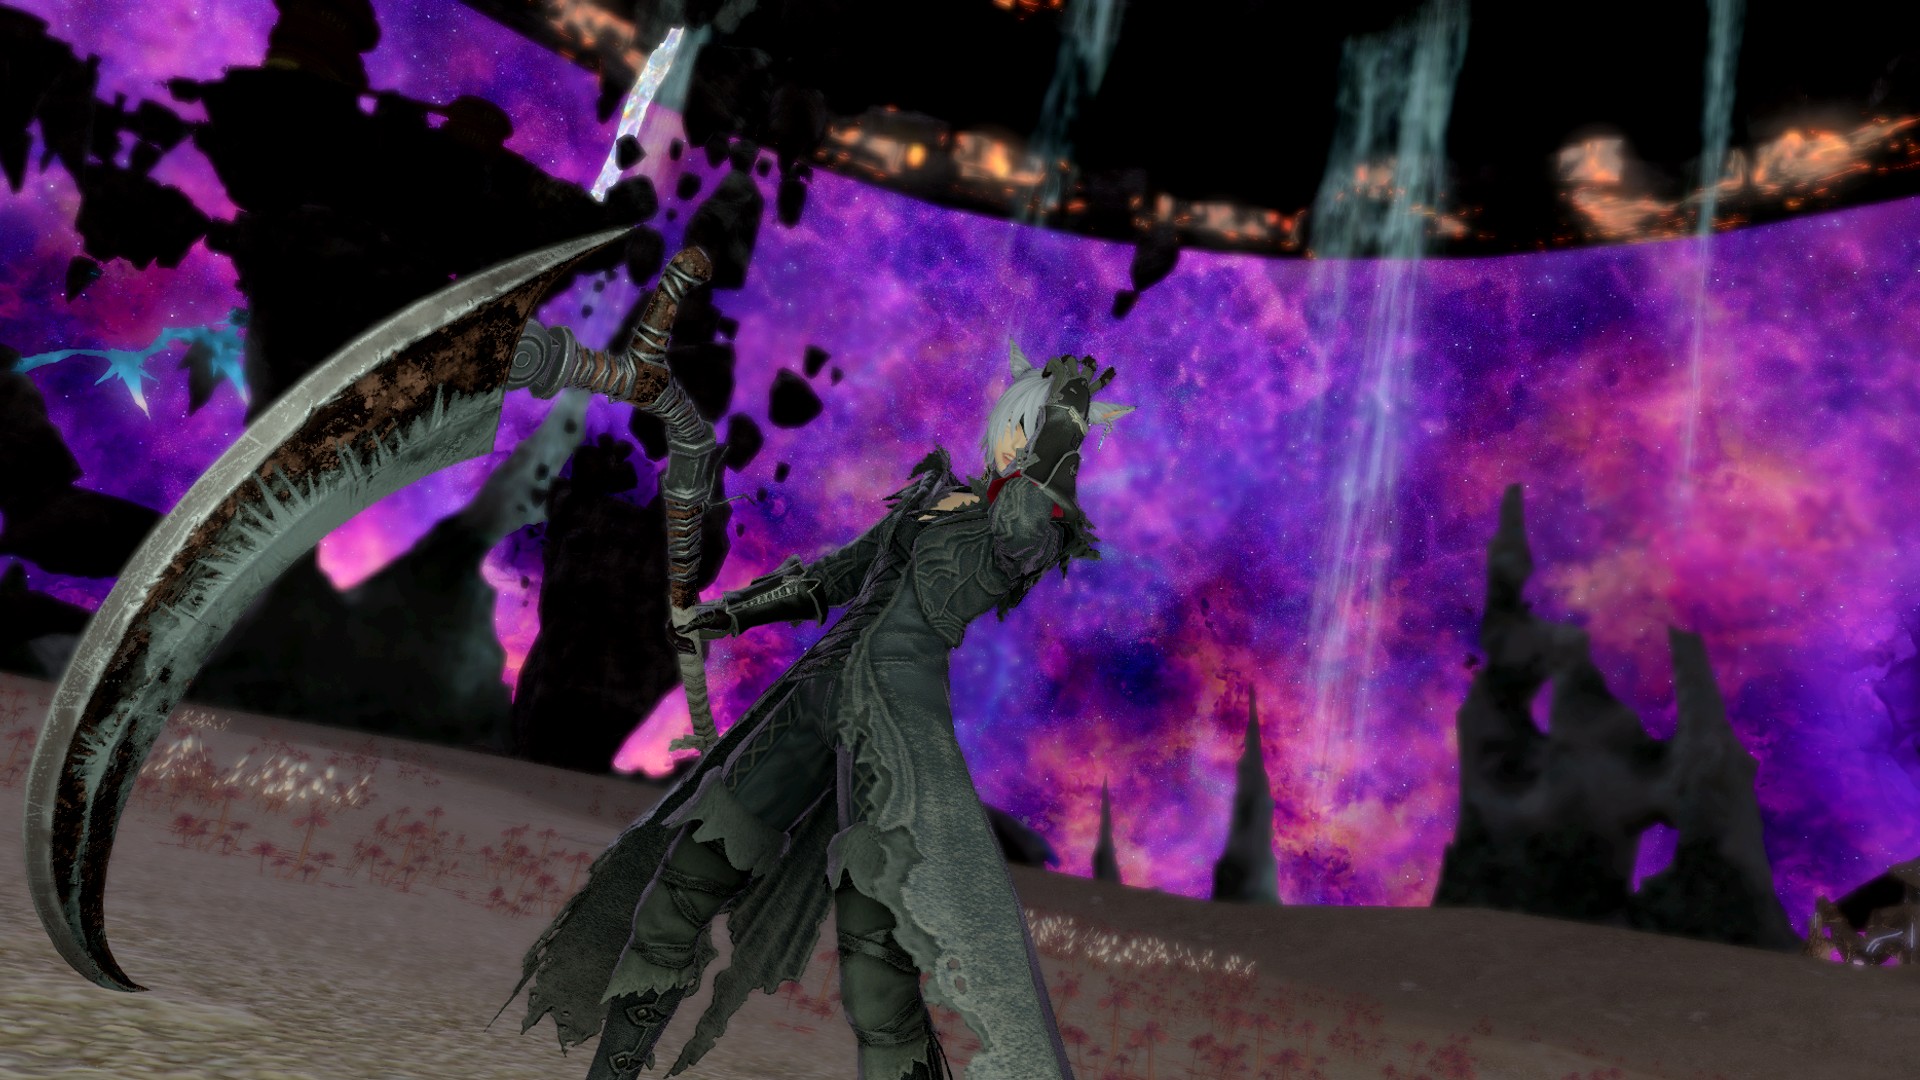 Death Scythe Art - Final Fantasy XIV: Endwalker Art Gallery